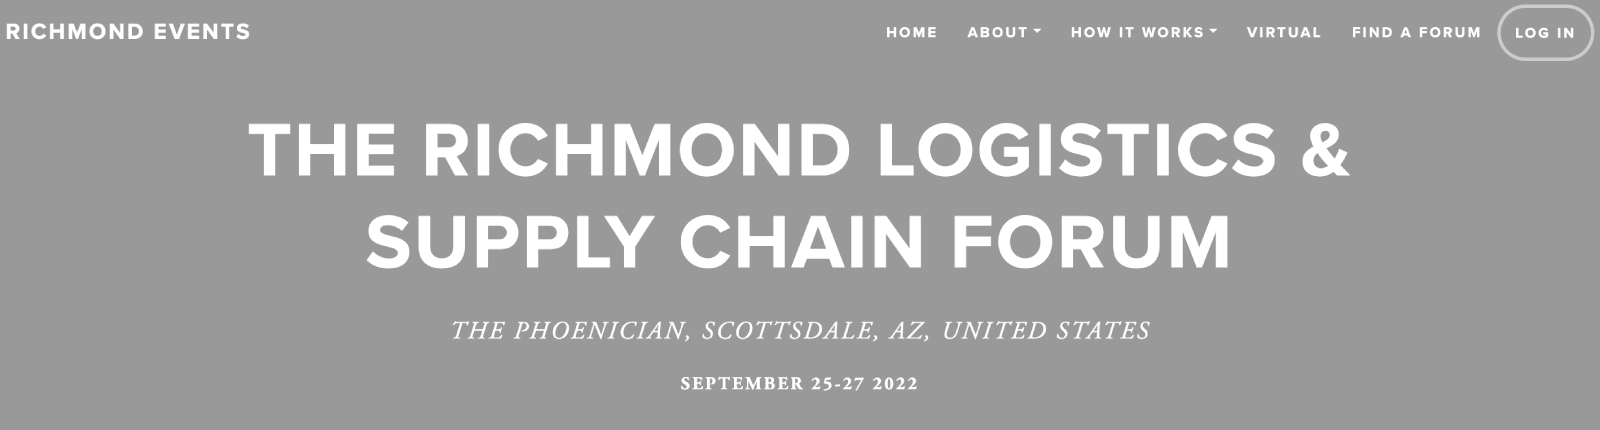 The Logistics & Supply Chain Forum